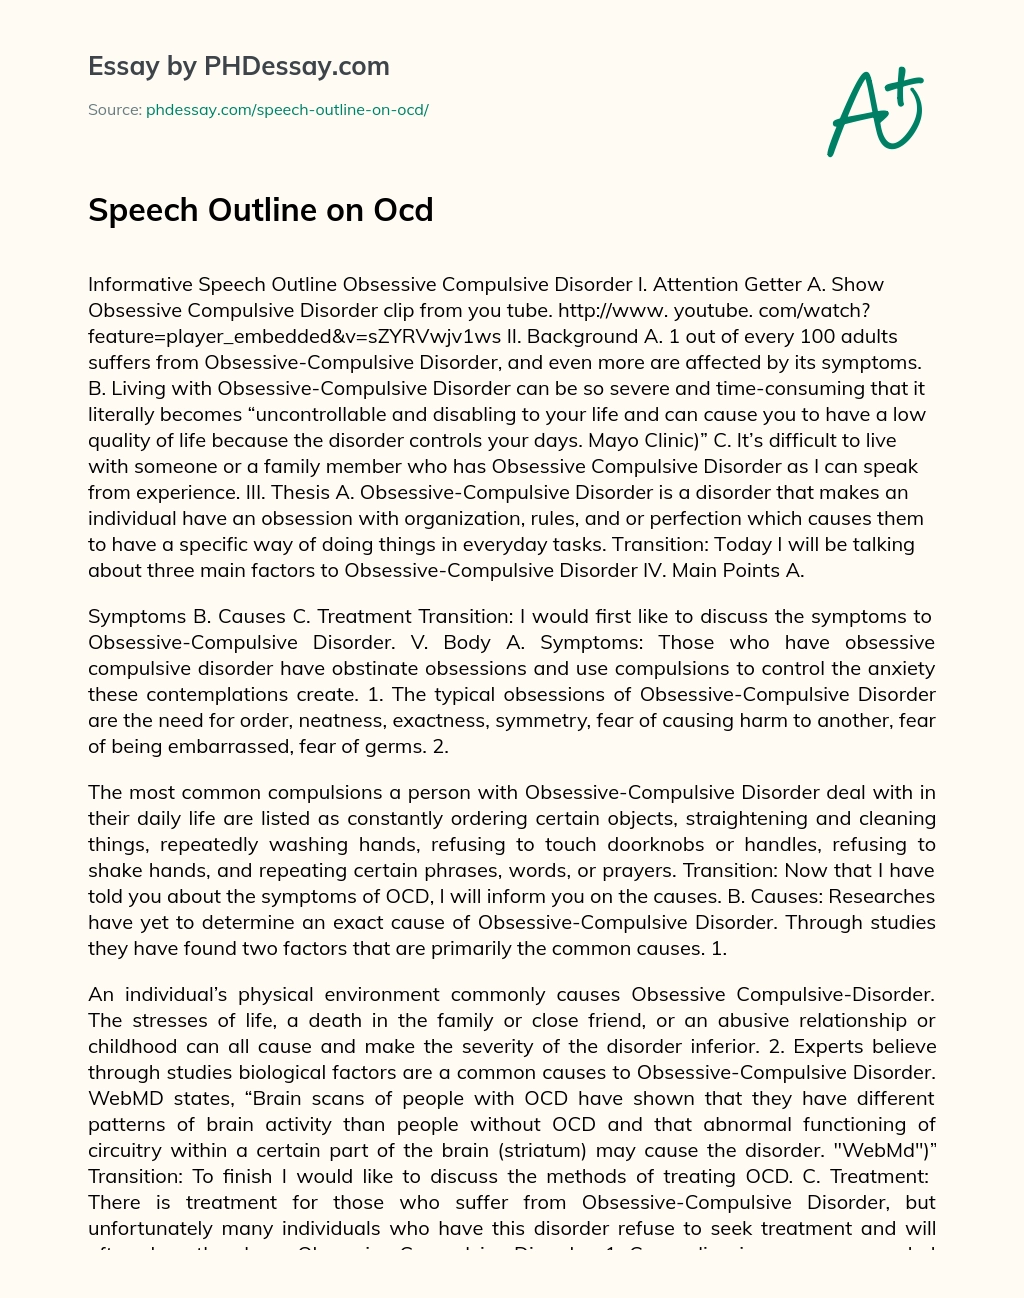 Speech Outline on Ocd essay